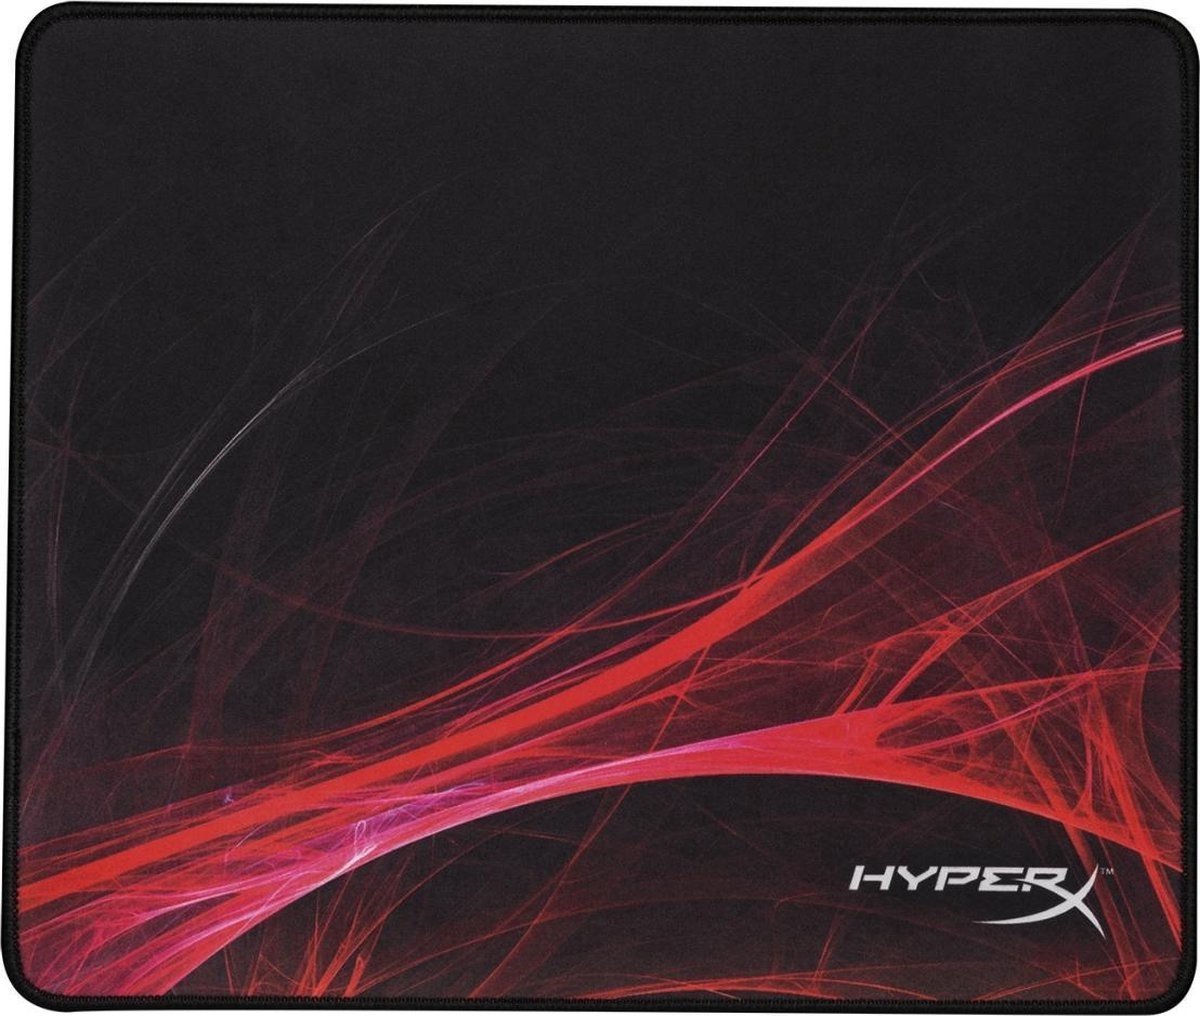 HyperX Fury S Pro Gaming M Muismat - Speed Edition